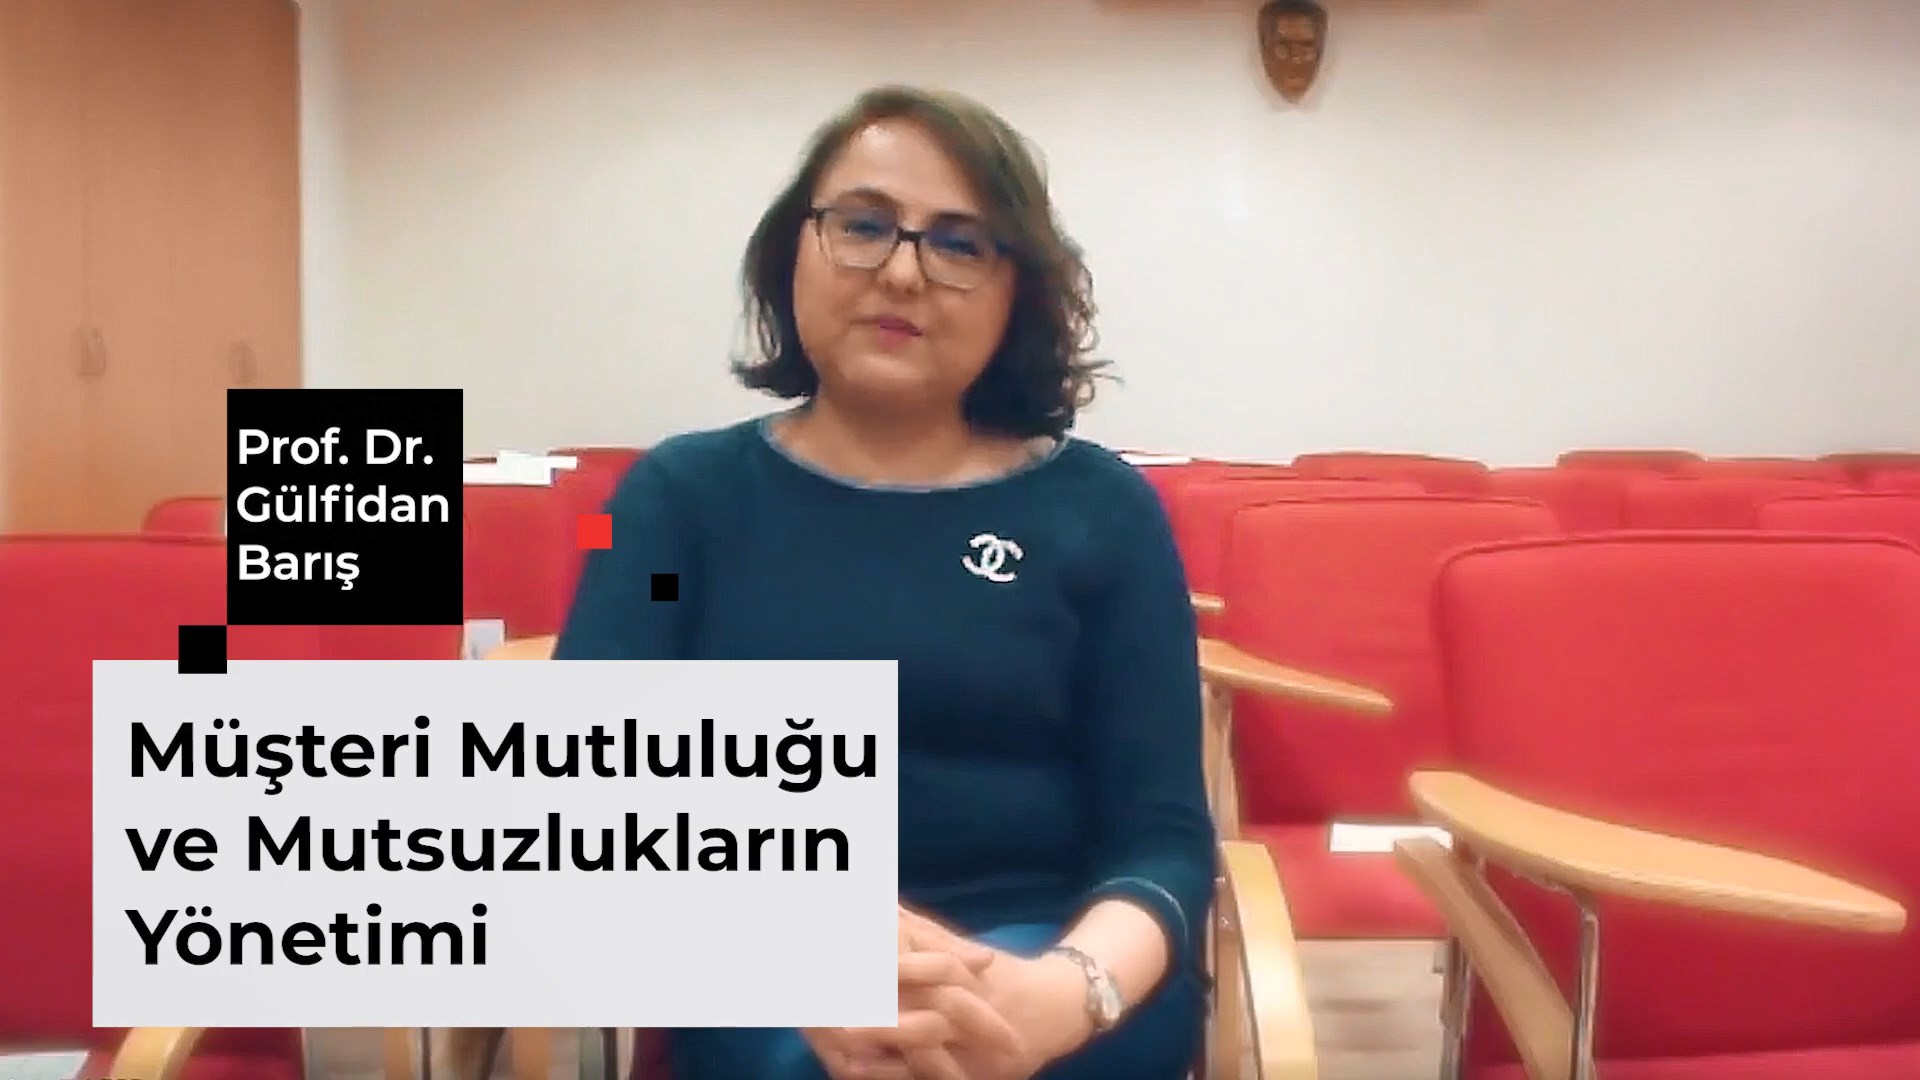 Customer Happiness and Management of Unhappiness - Prof. Dr. Gülfidan Barış